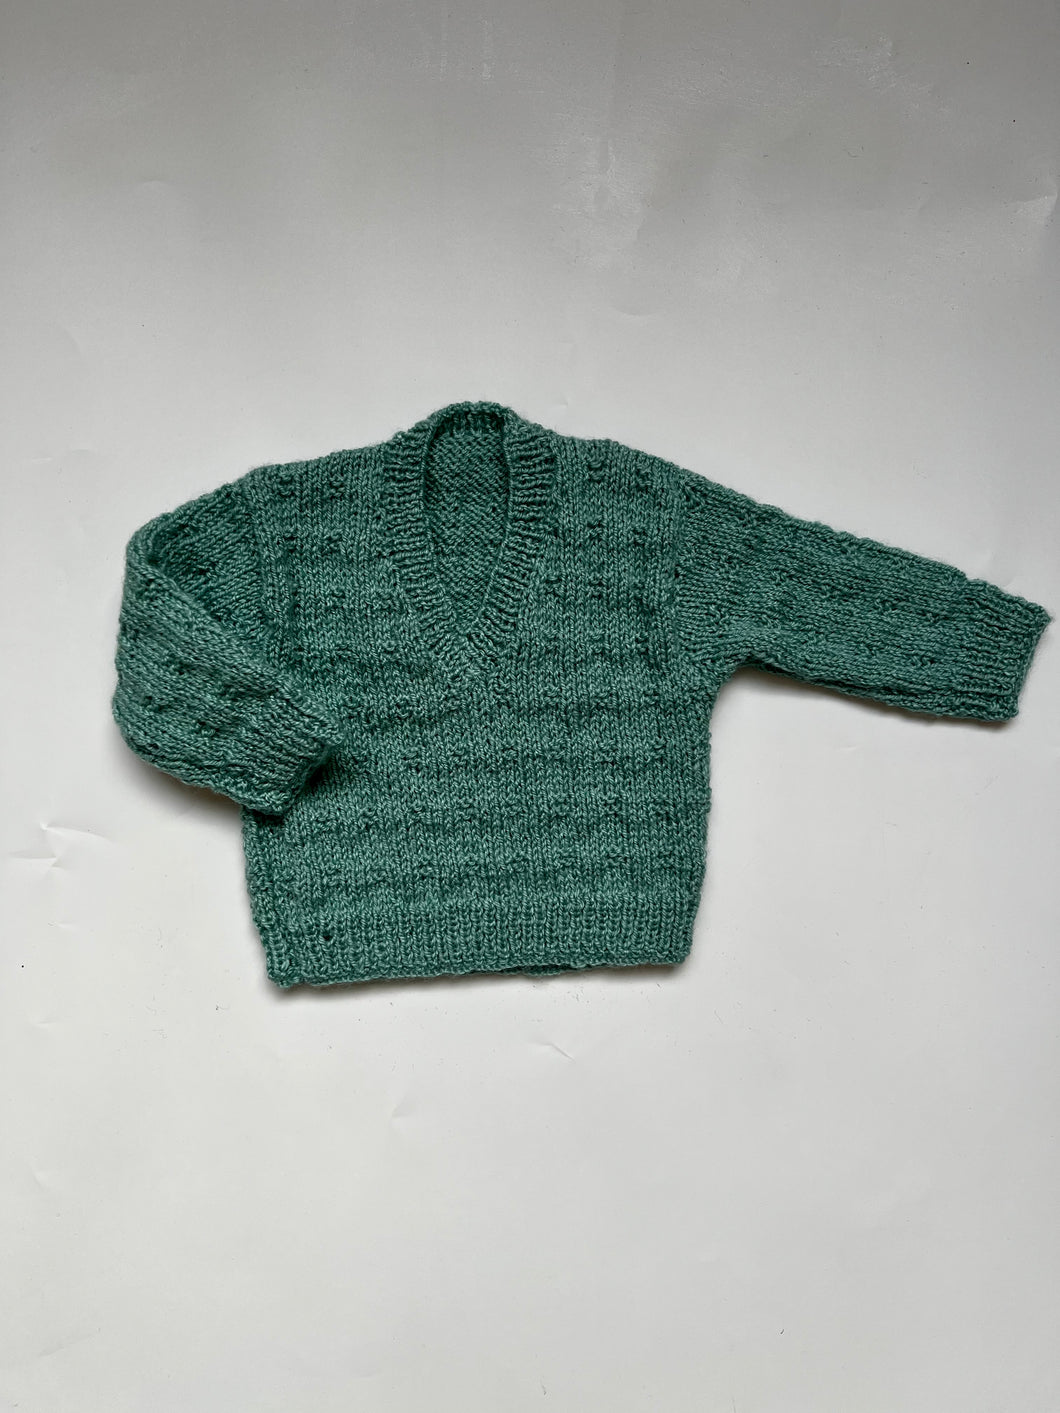 Sale: Hand Knit Green Jumper 0-3 Months